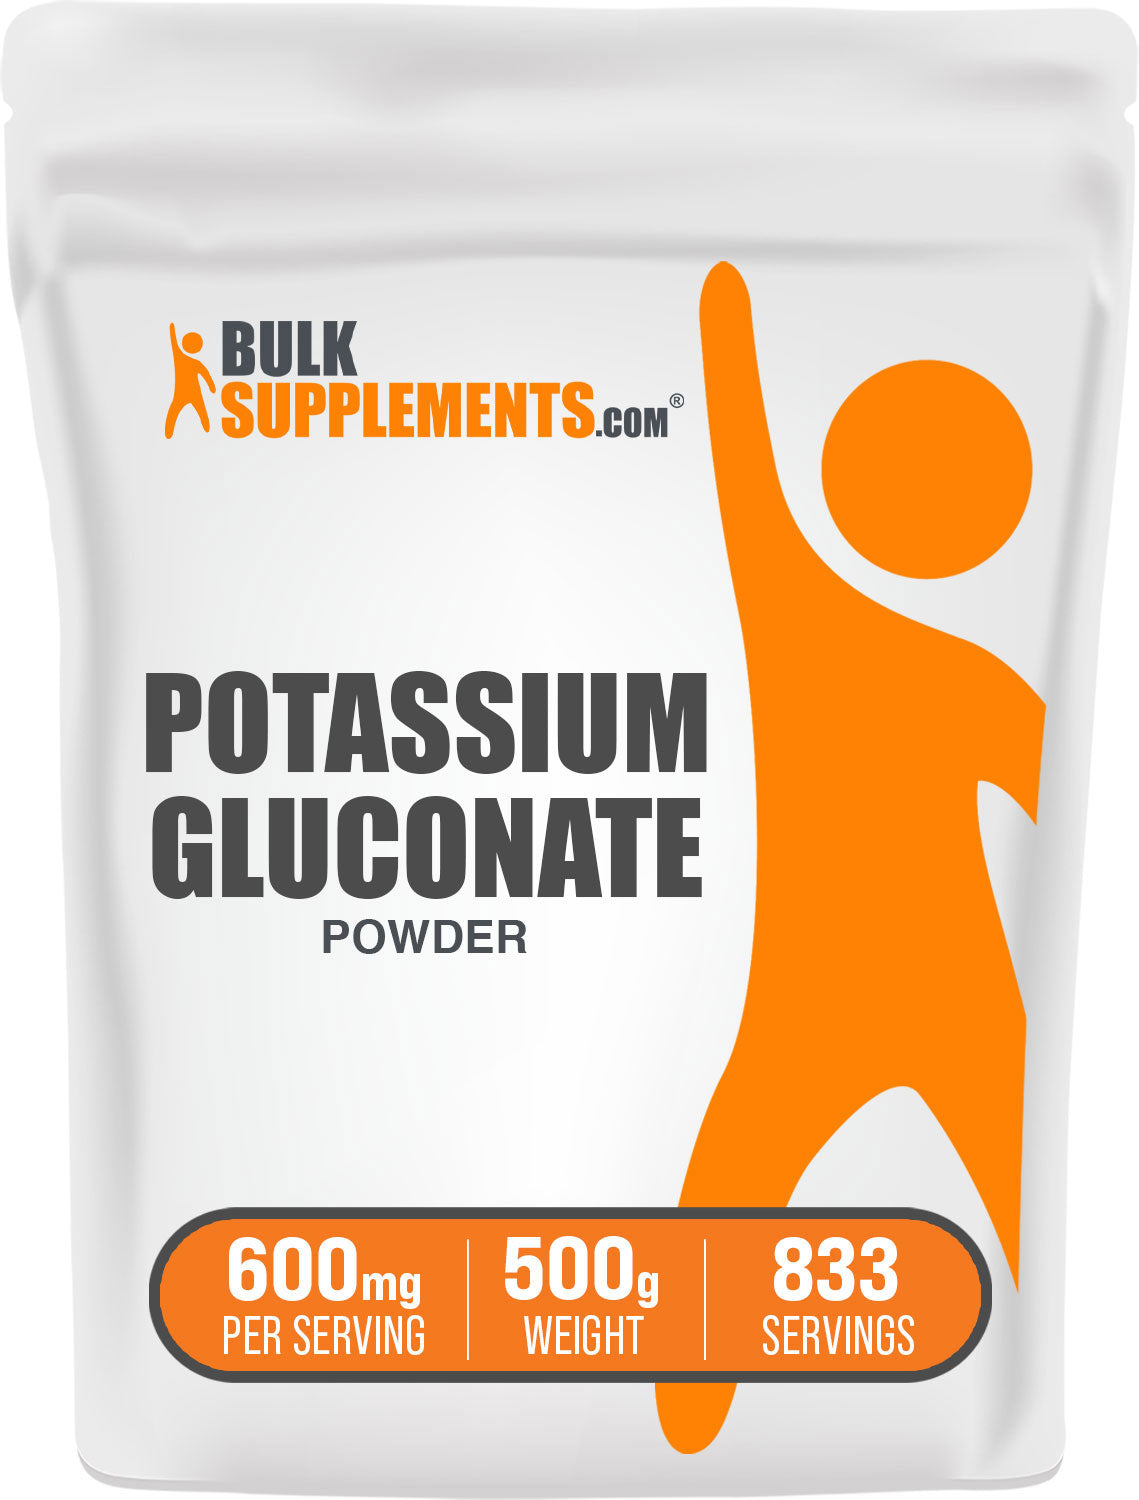 BulkSupplements.com Potassium Gluconate Powder 500g bag